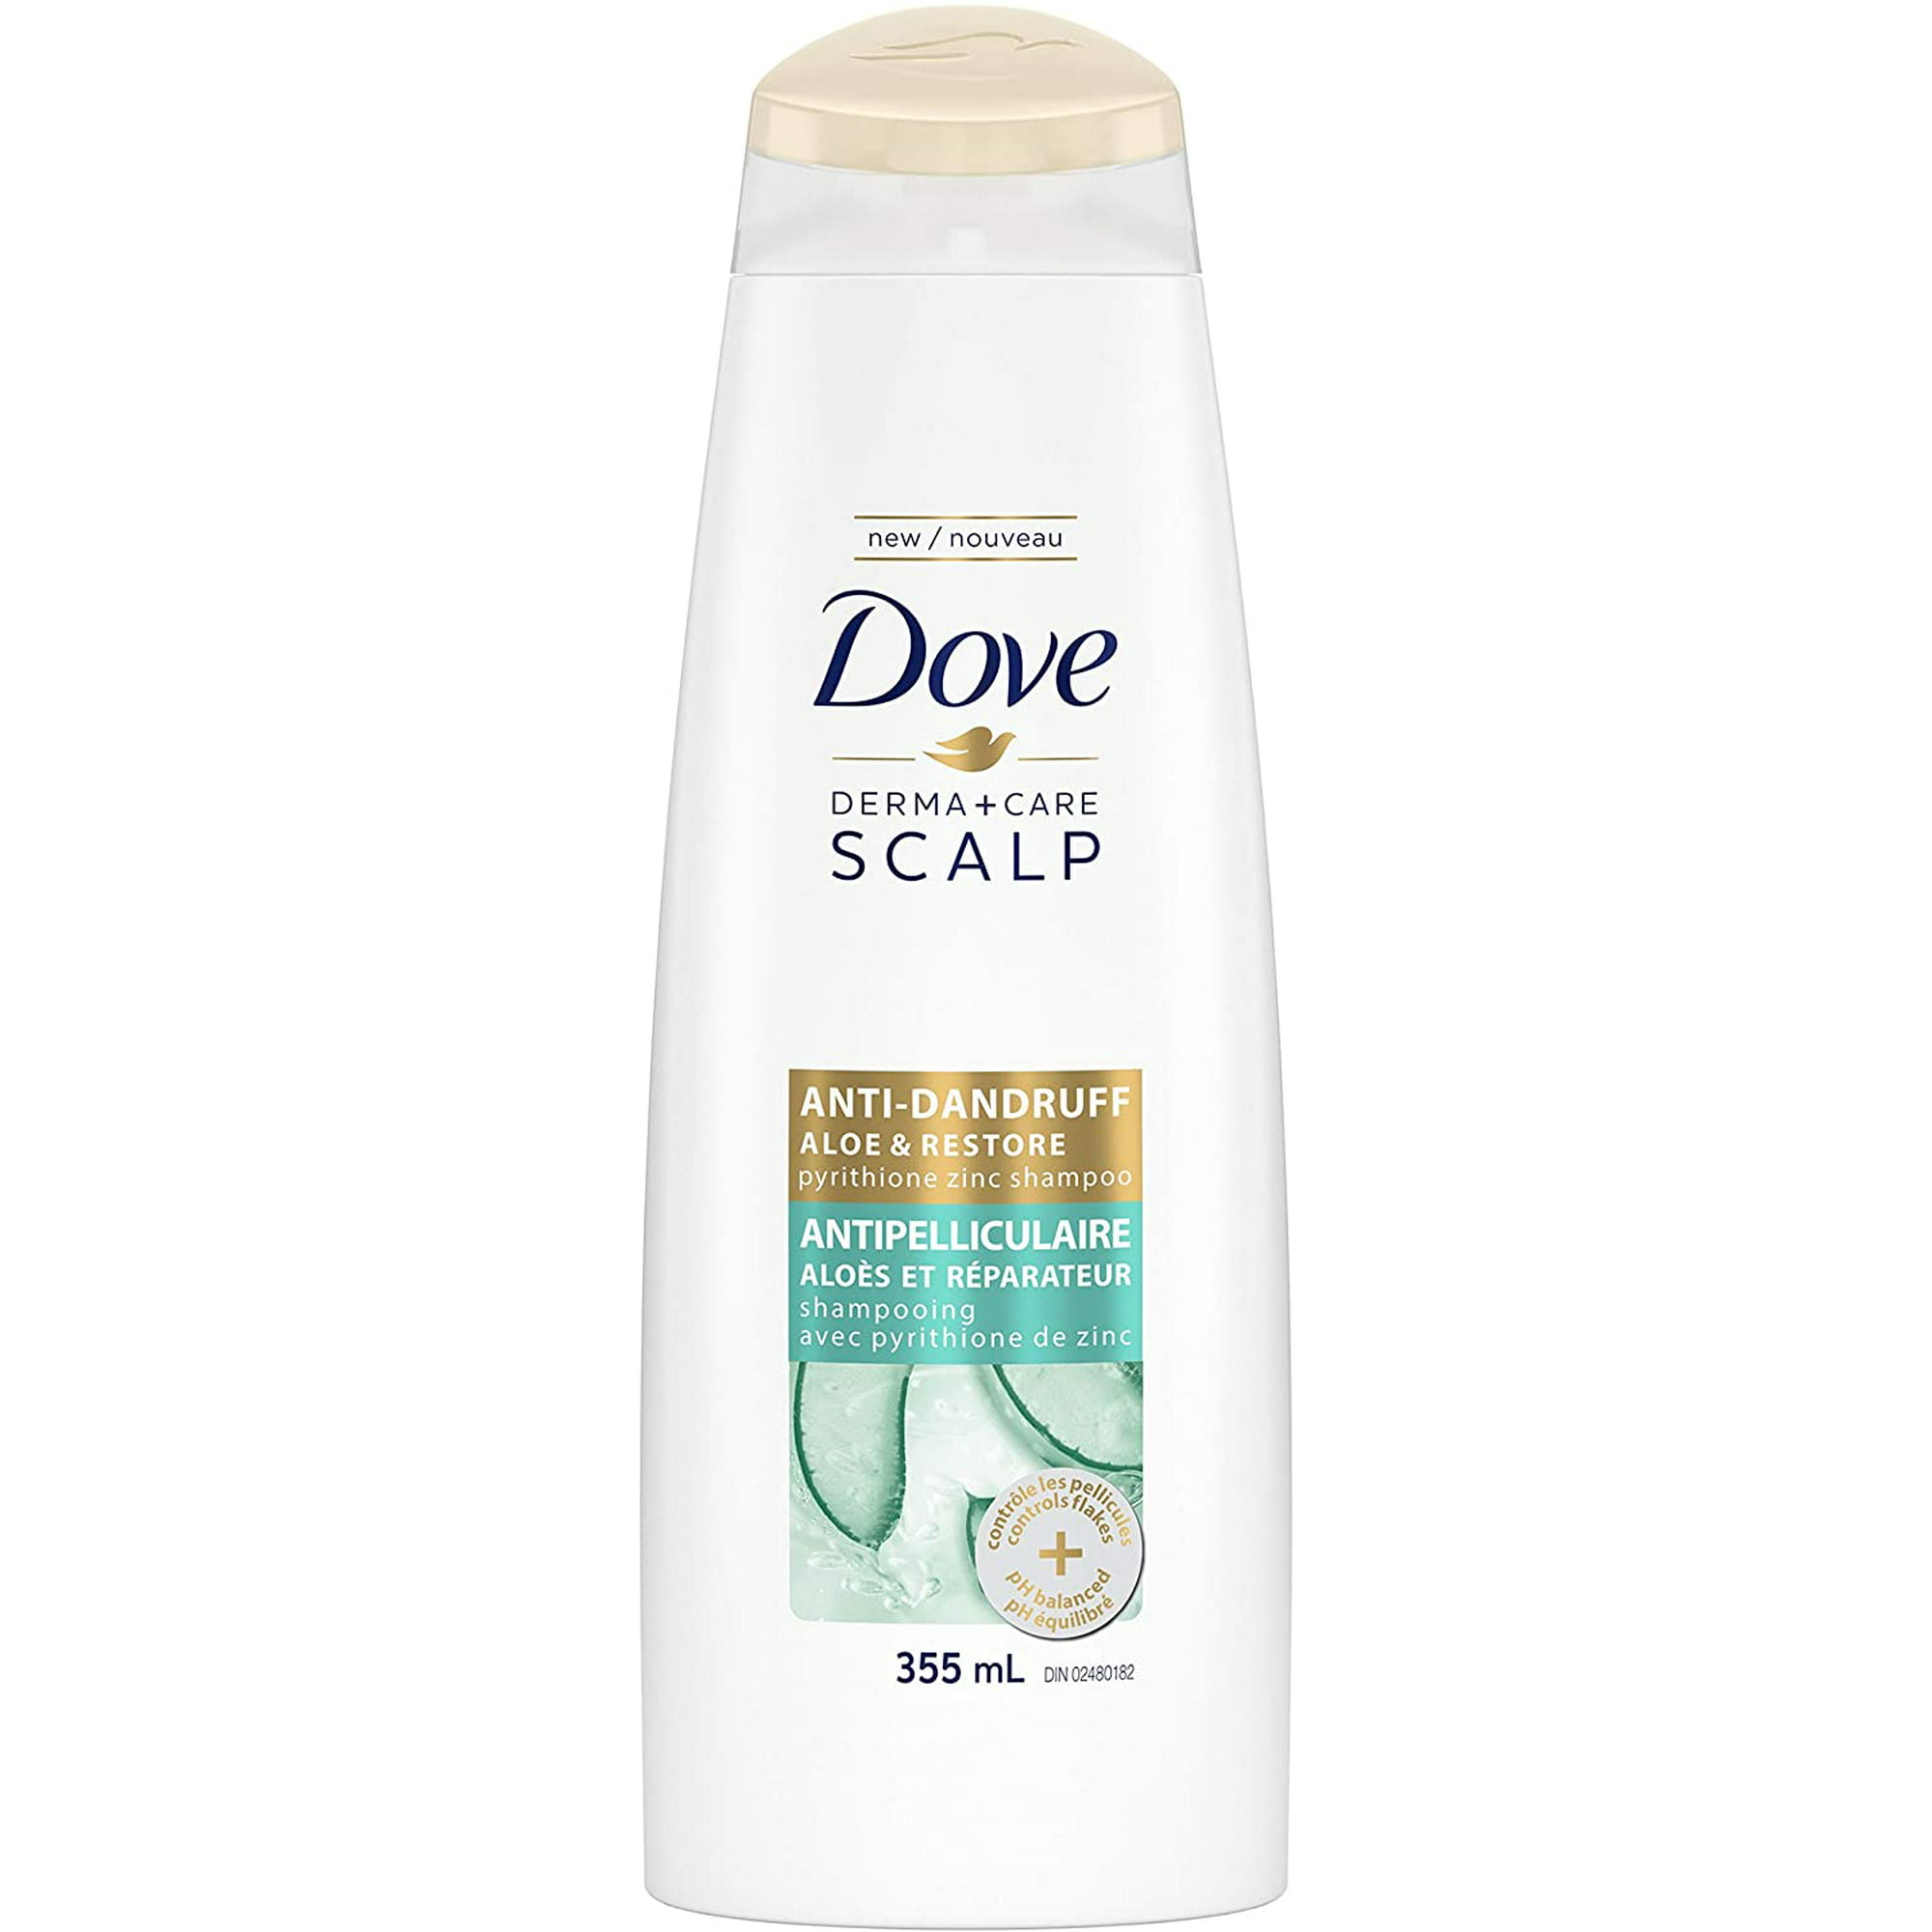 Dove Derma+care Scalp Anti-Dandruff Shampoo for flake-free hair Aloe &  Restore shampoo with aloe Vera and ginger 355 ml | Walmart Canada